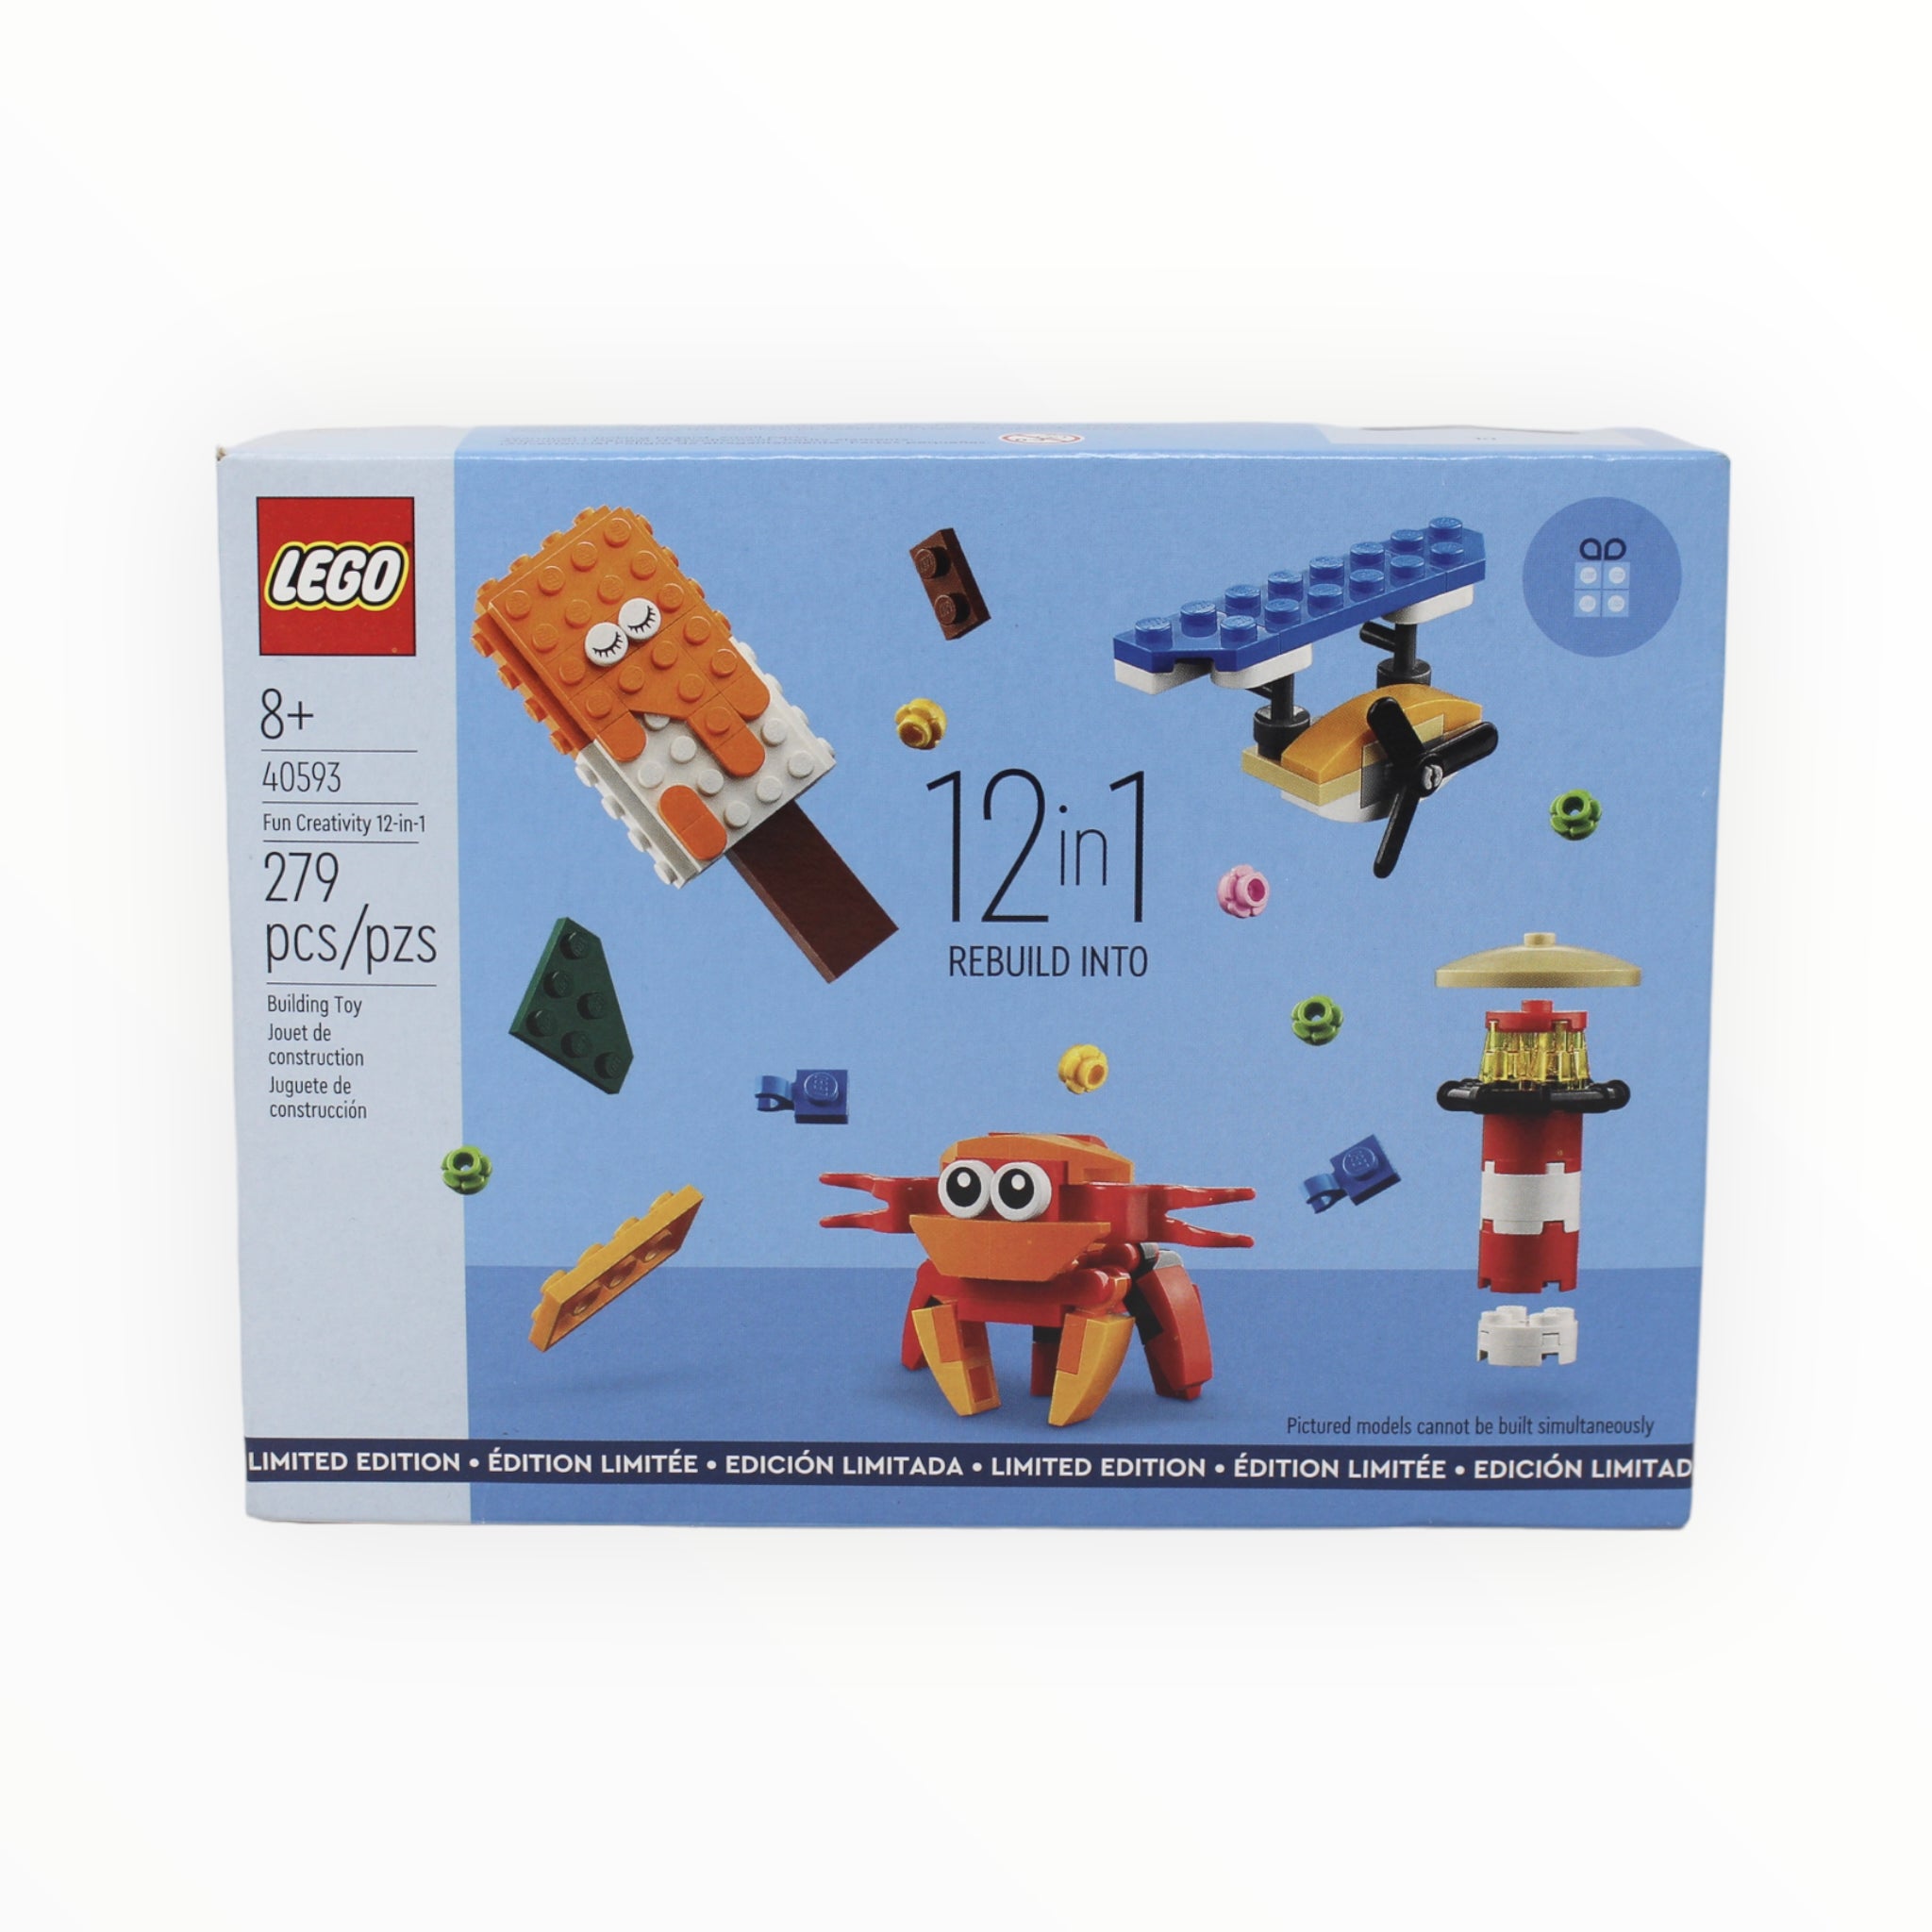 Retired Set 40593 LEGO Fun Creativity 12-in-1